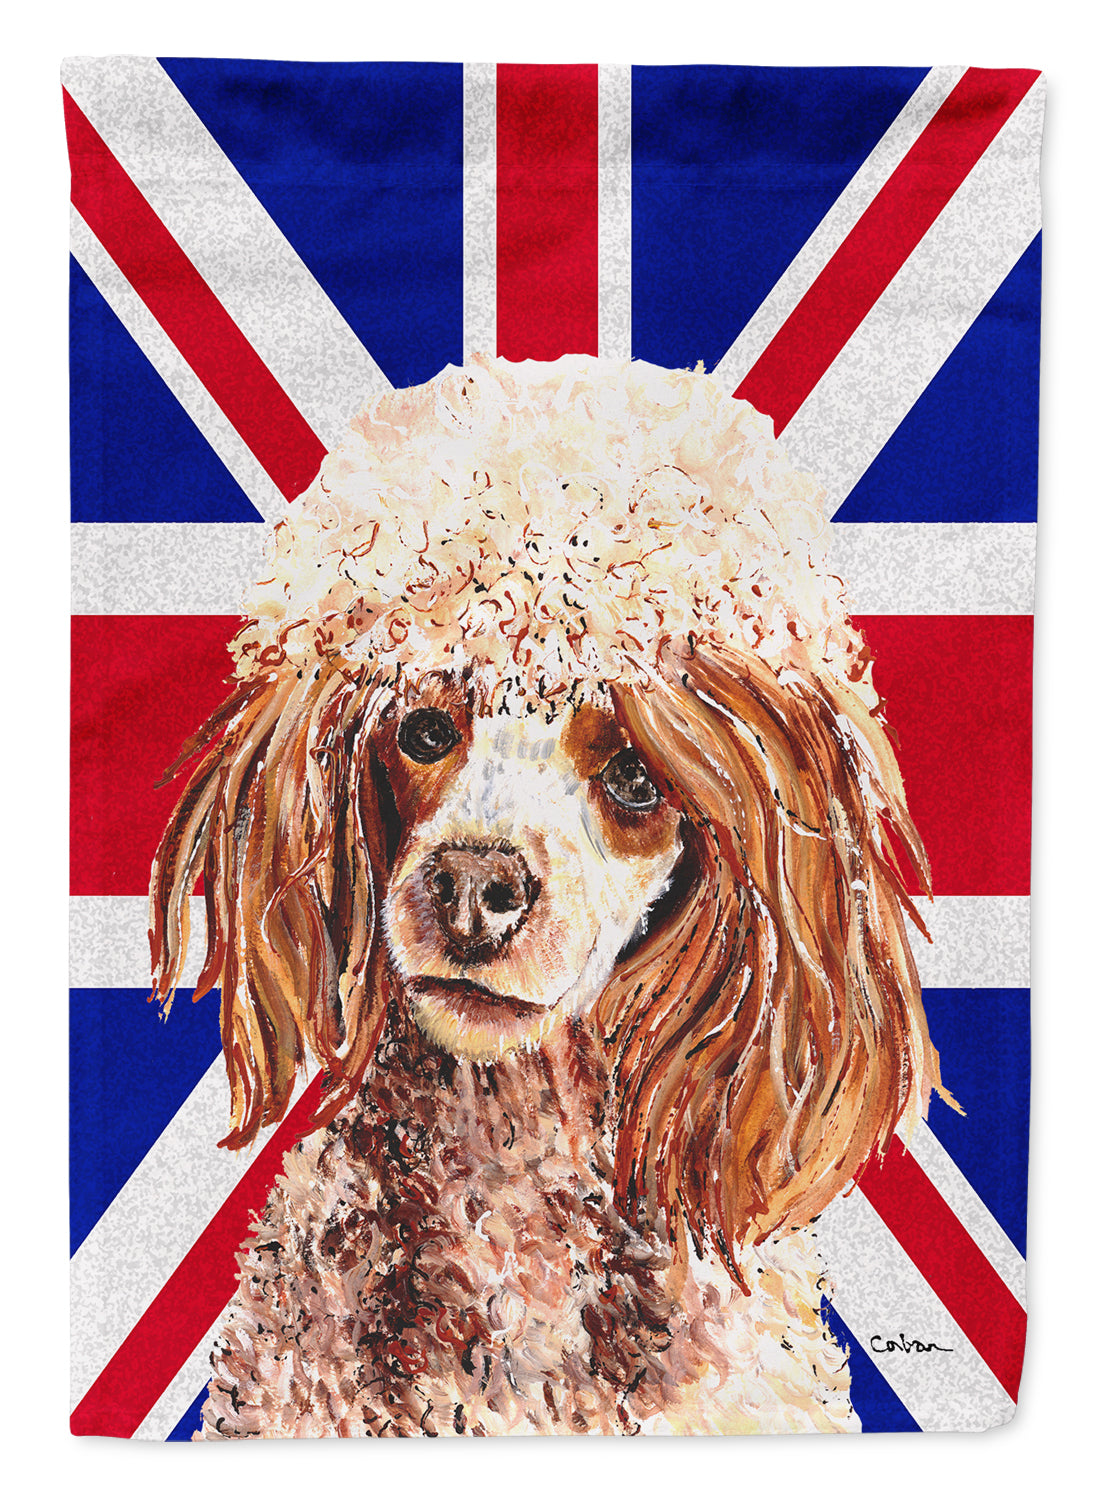 Red Miniature Poodle with English Union Jack British Flag Flag Garden Size SC9888GF